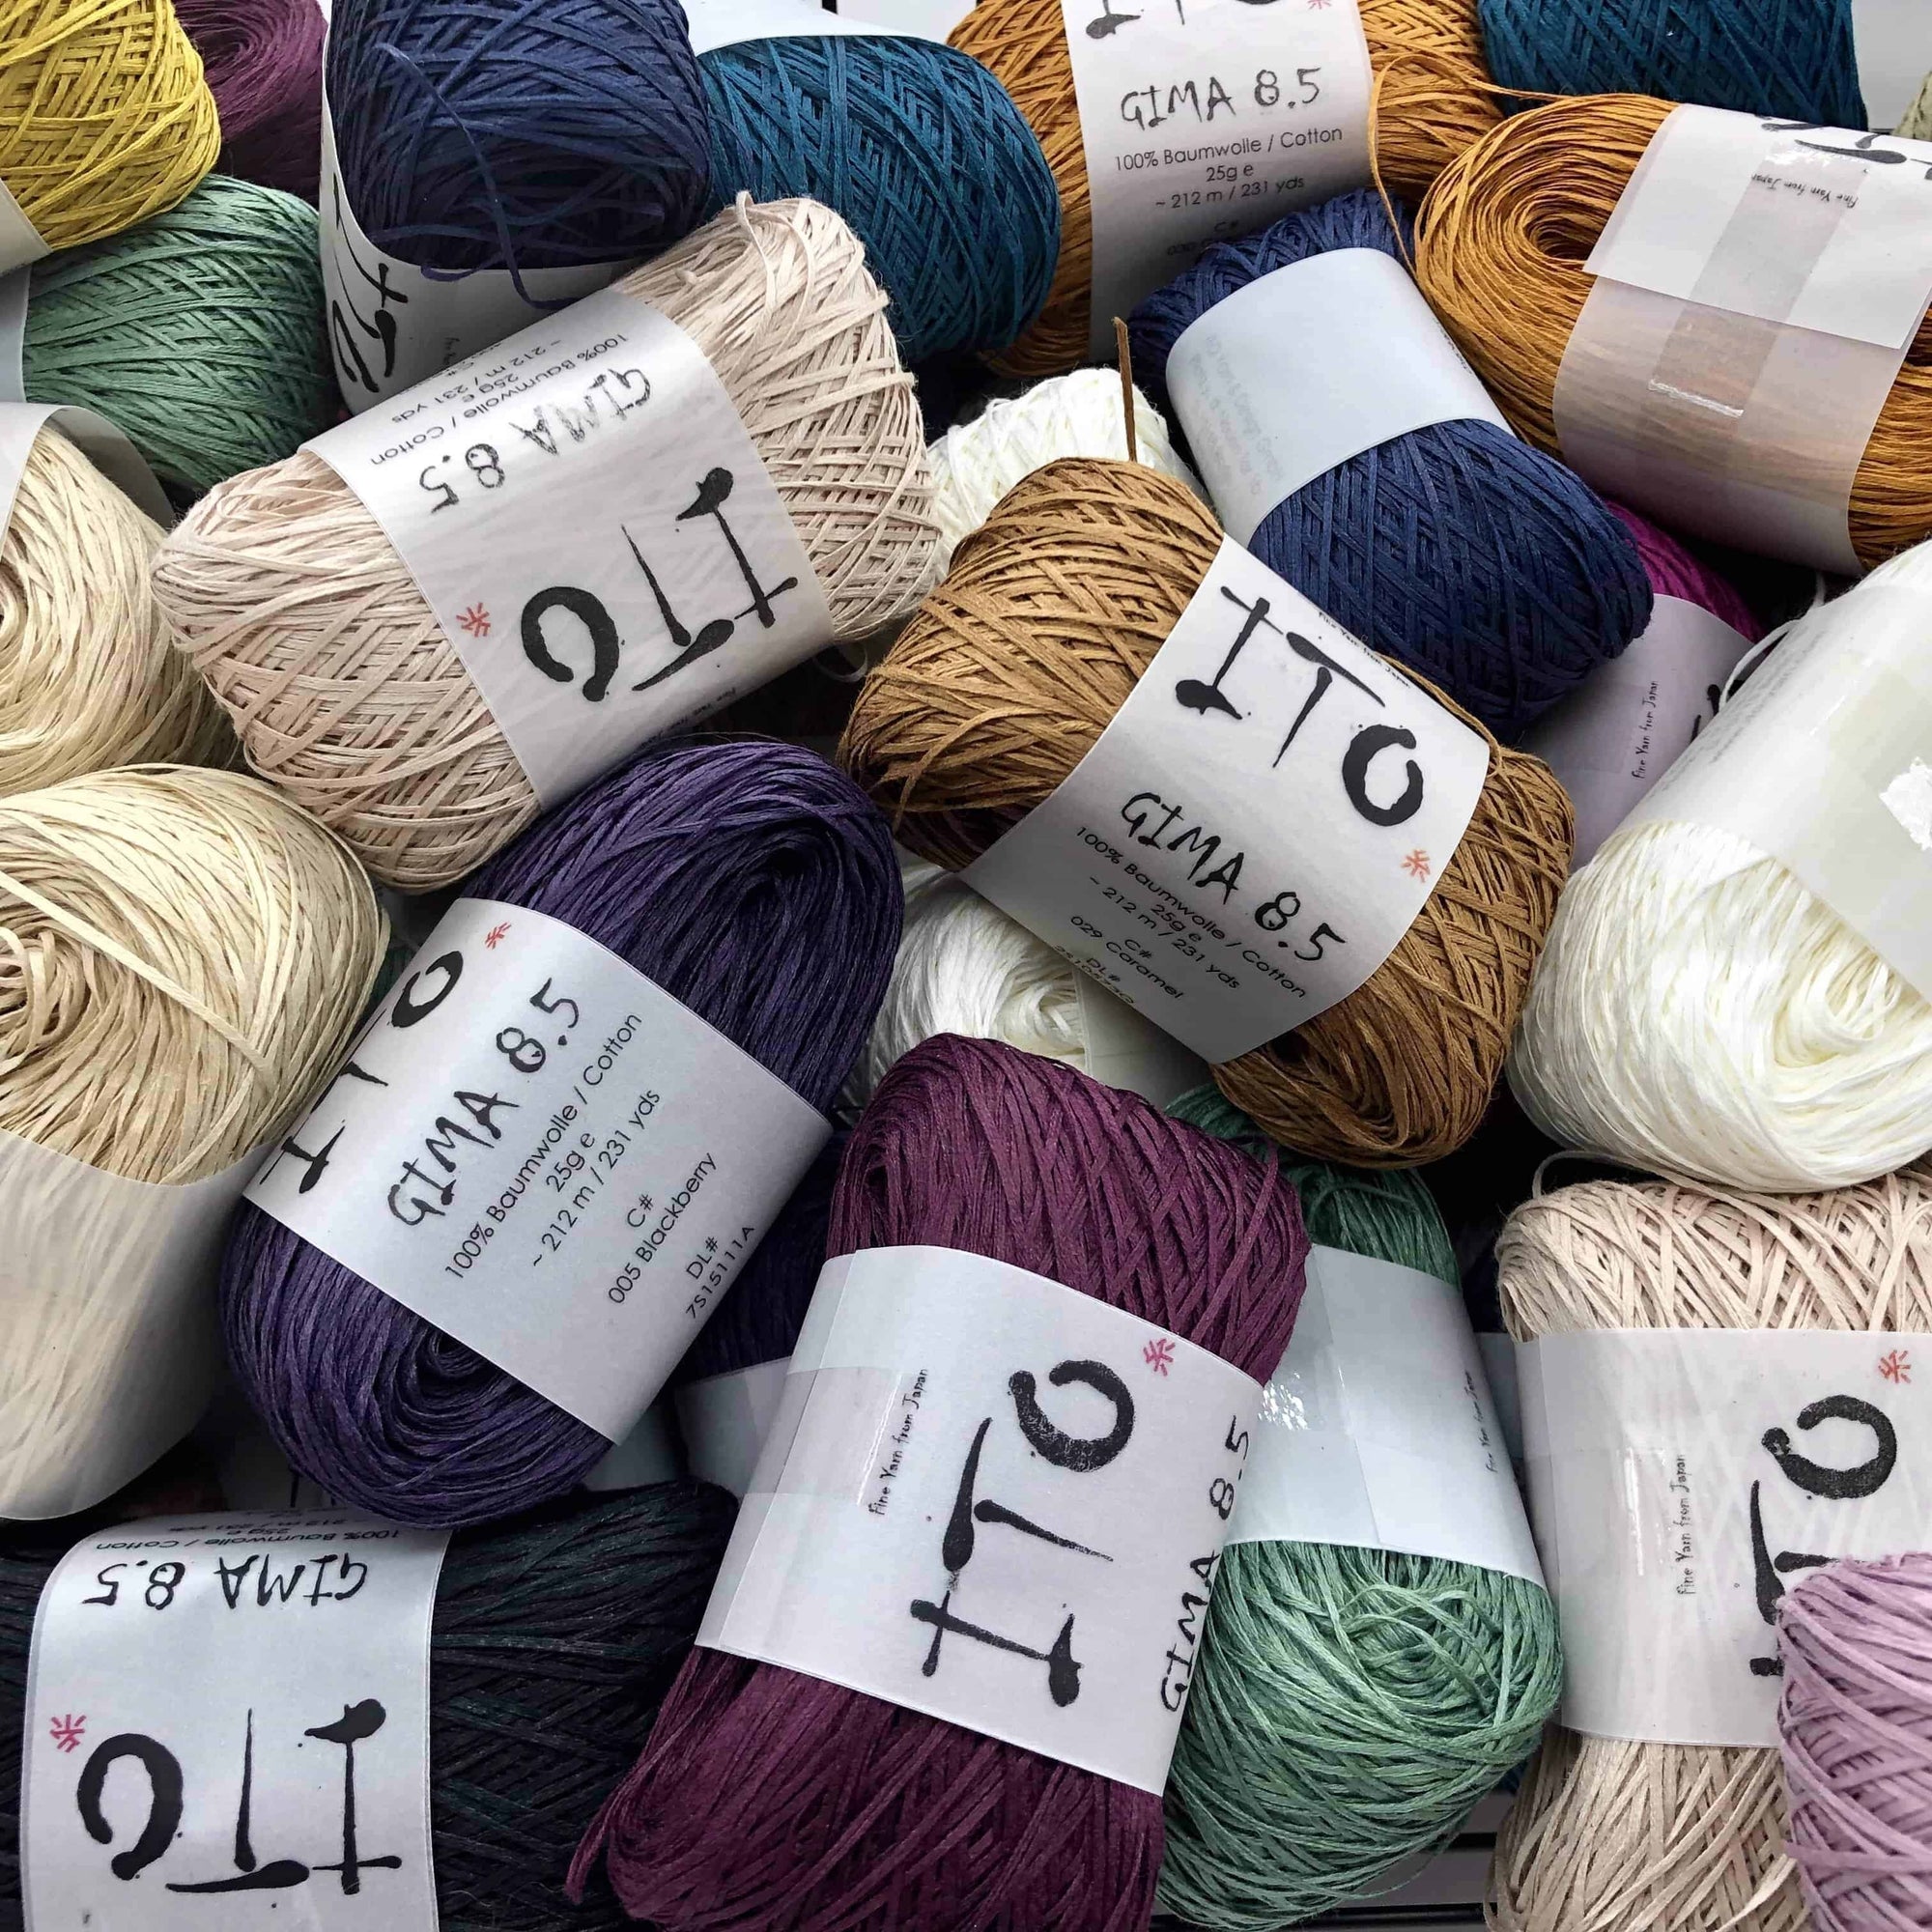 ito gima 8.5 cotton yarn - Thread Collective Australia